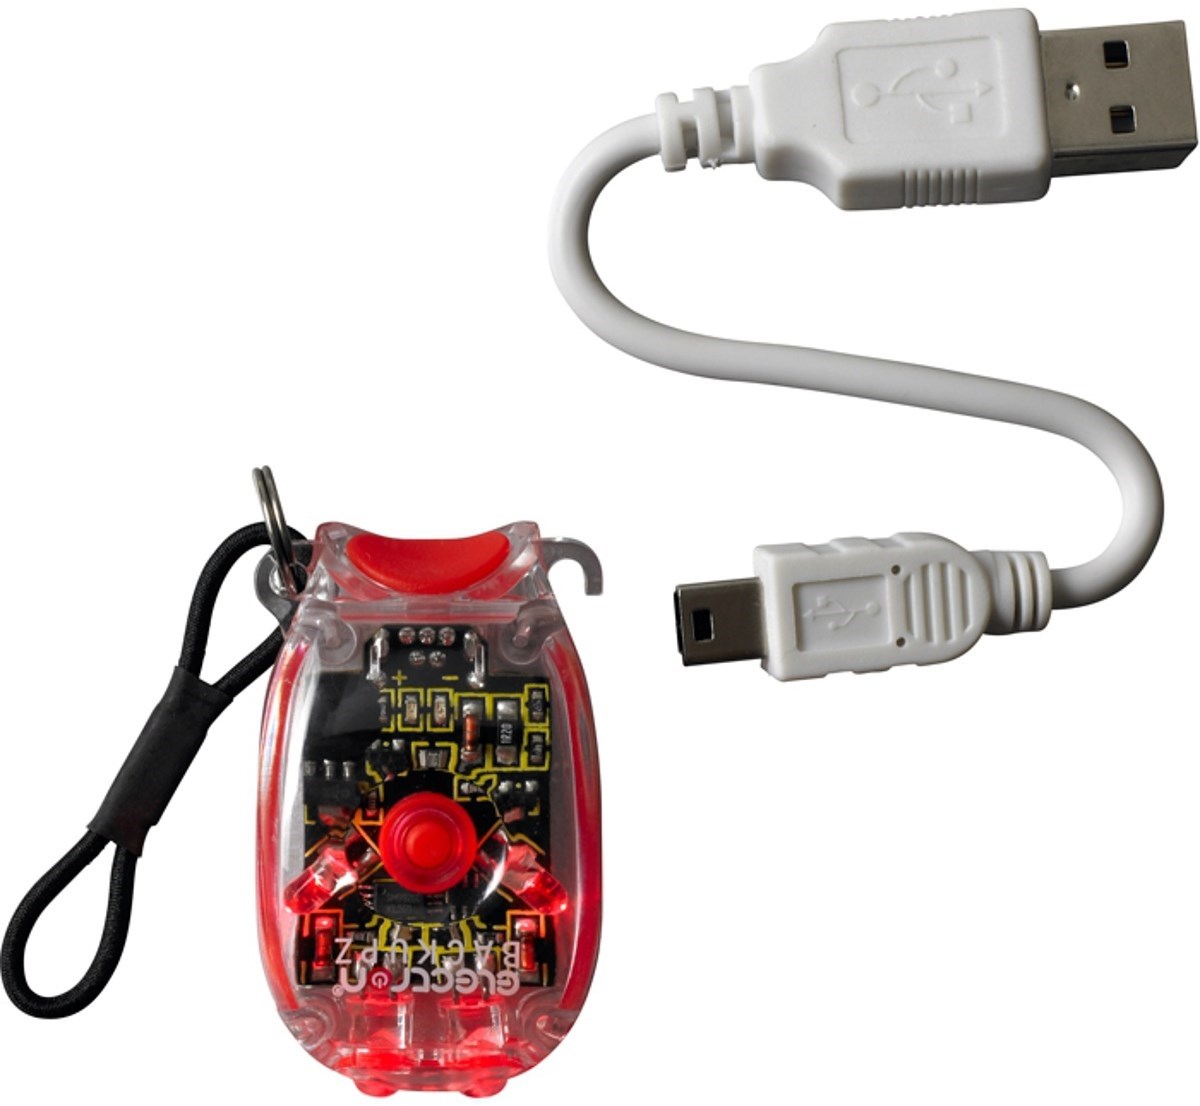 Electron Backupz Rear USB Rechargeable LED Safety Light product image